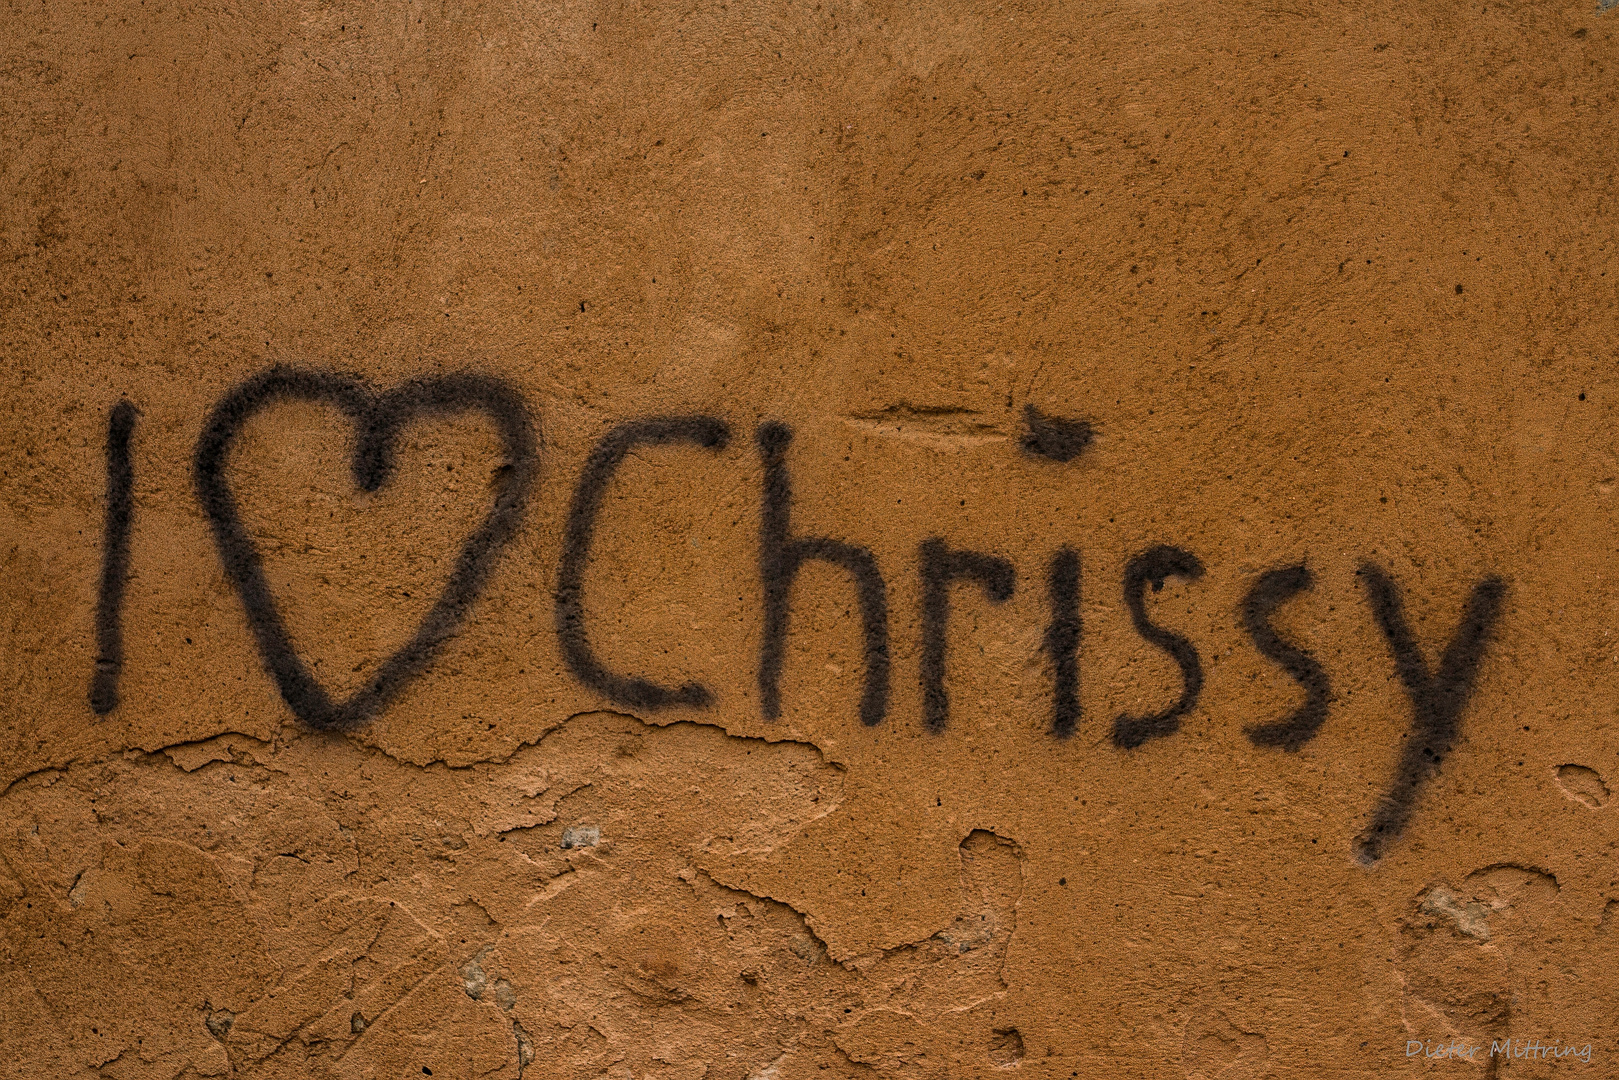 "I love Chrissy"